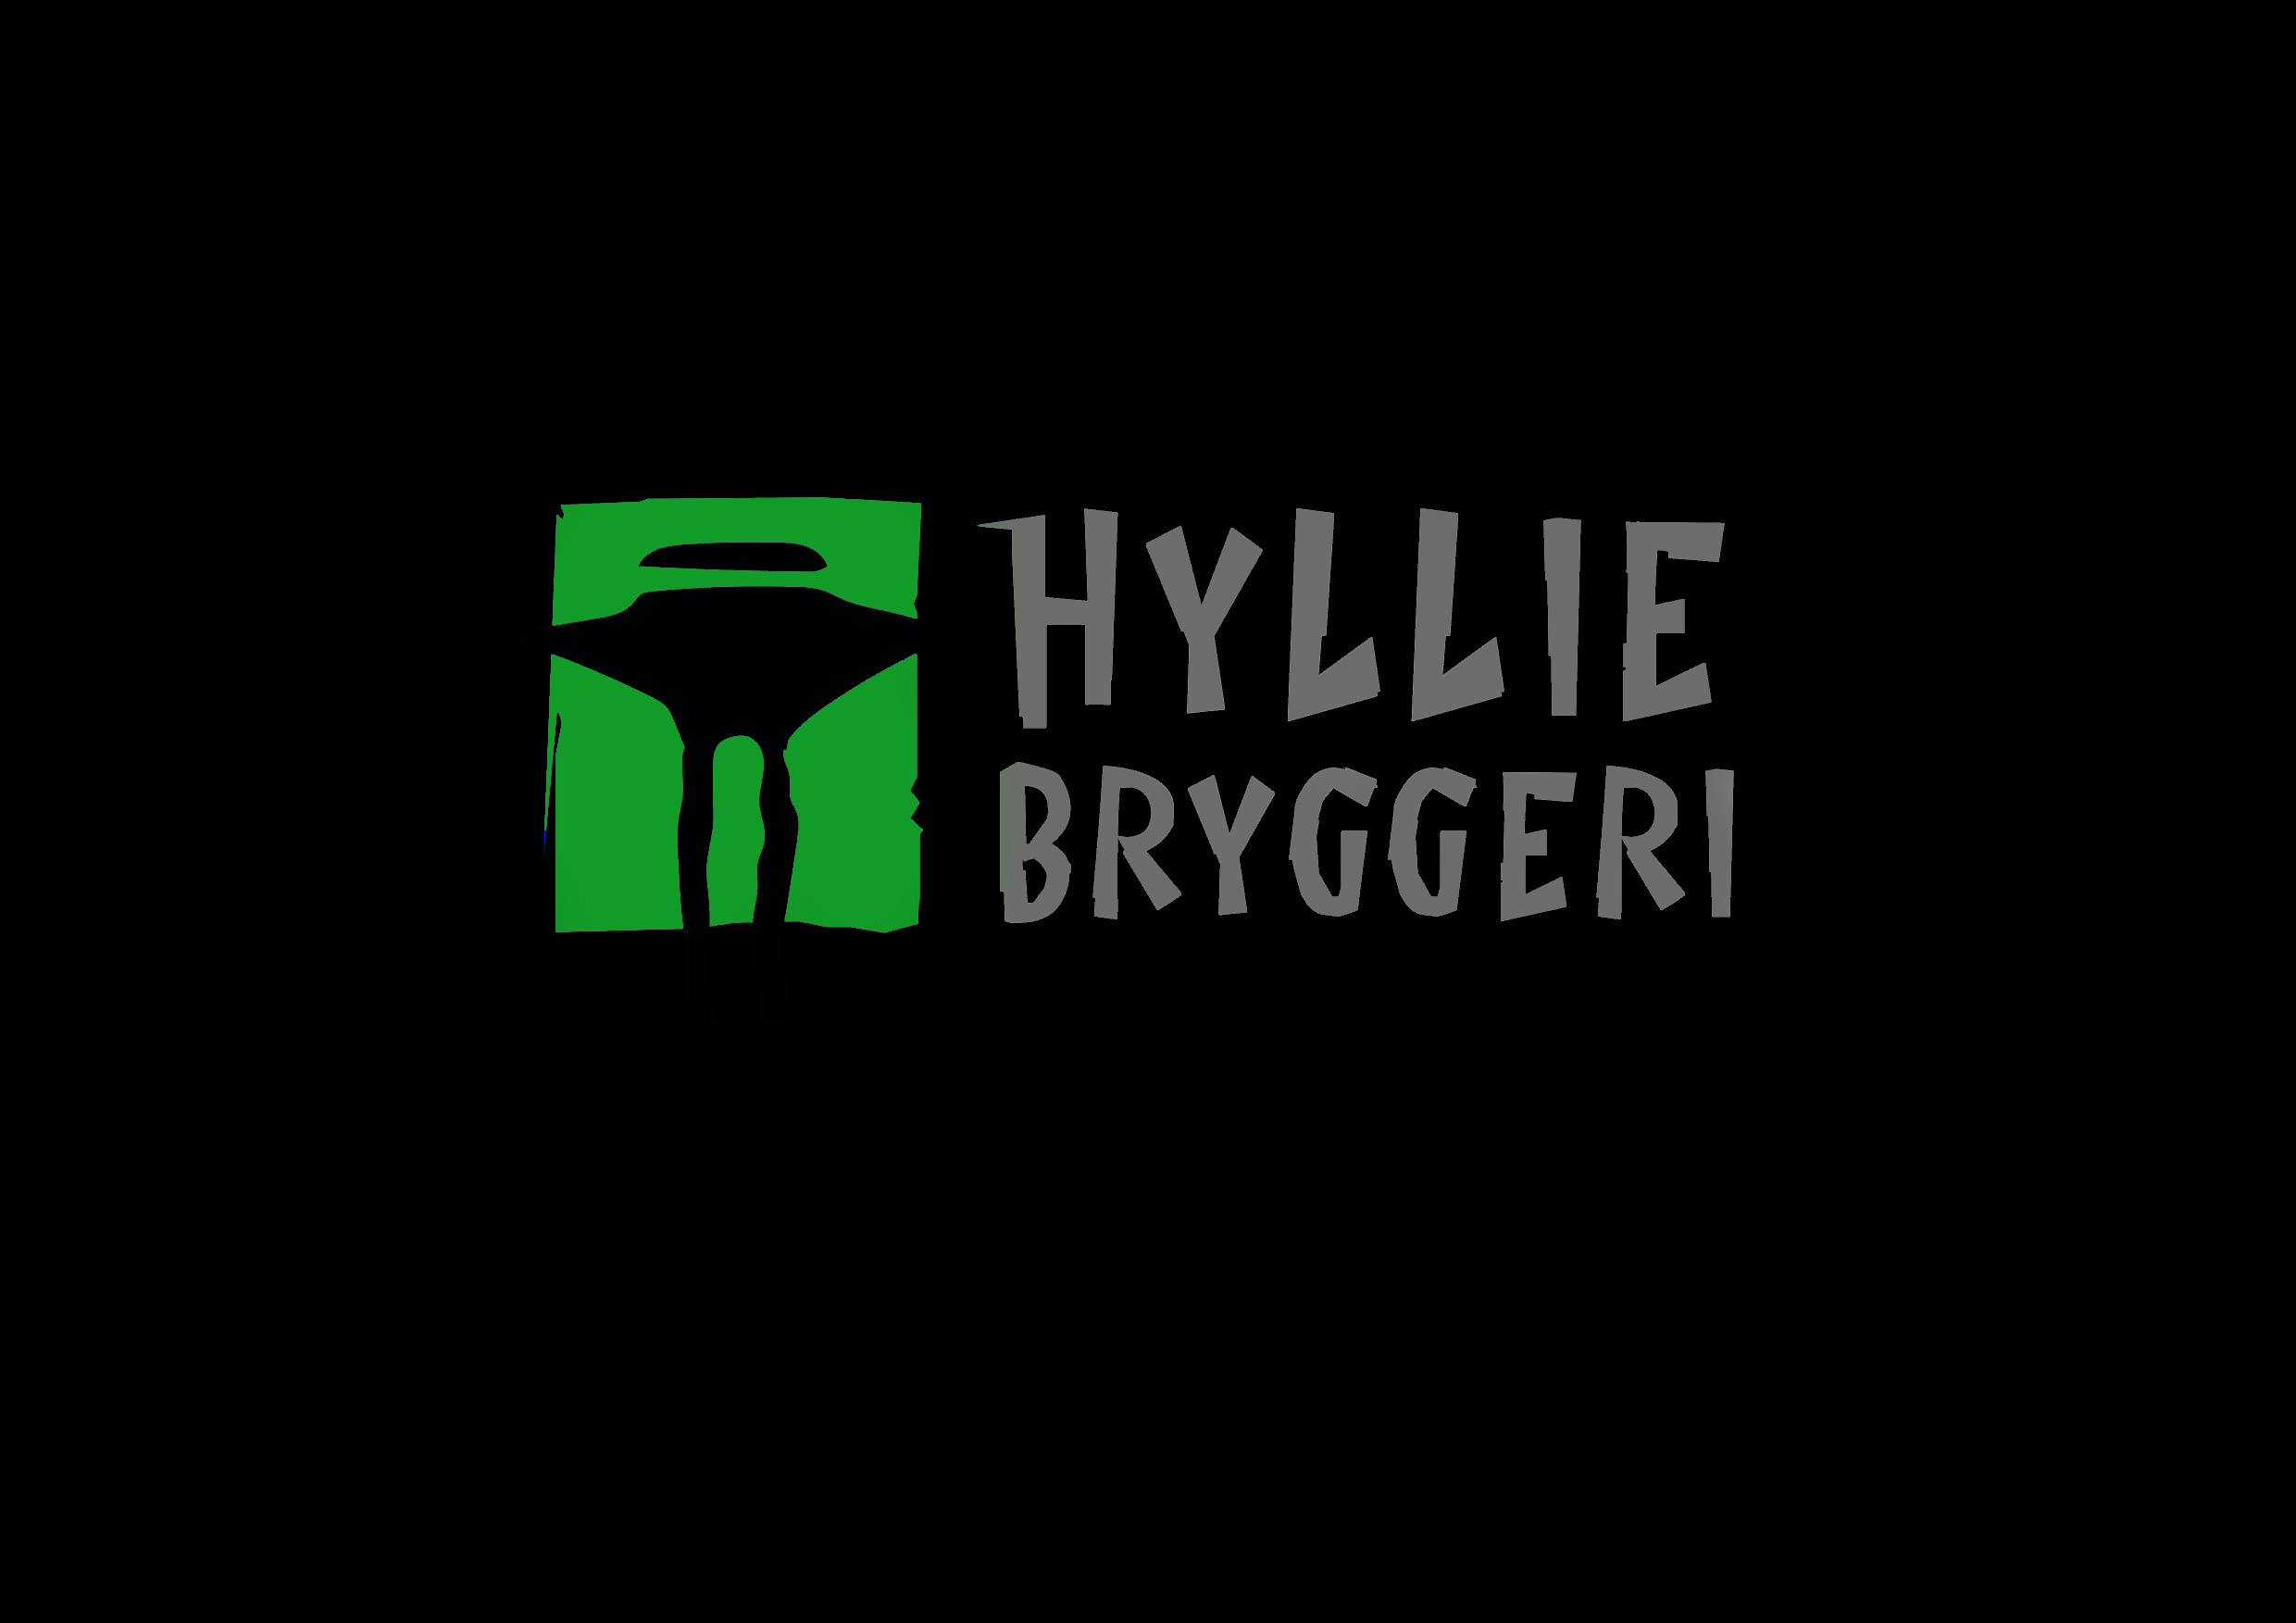 HYLLIE BRYGGERI